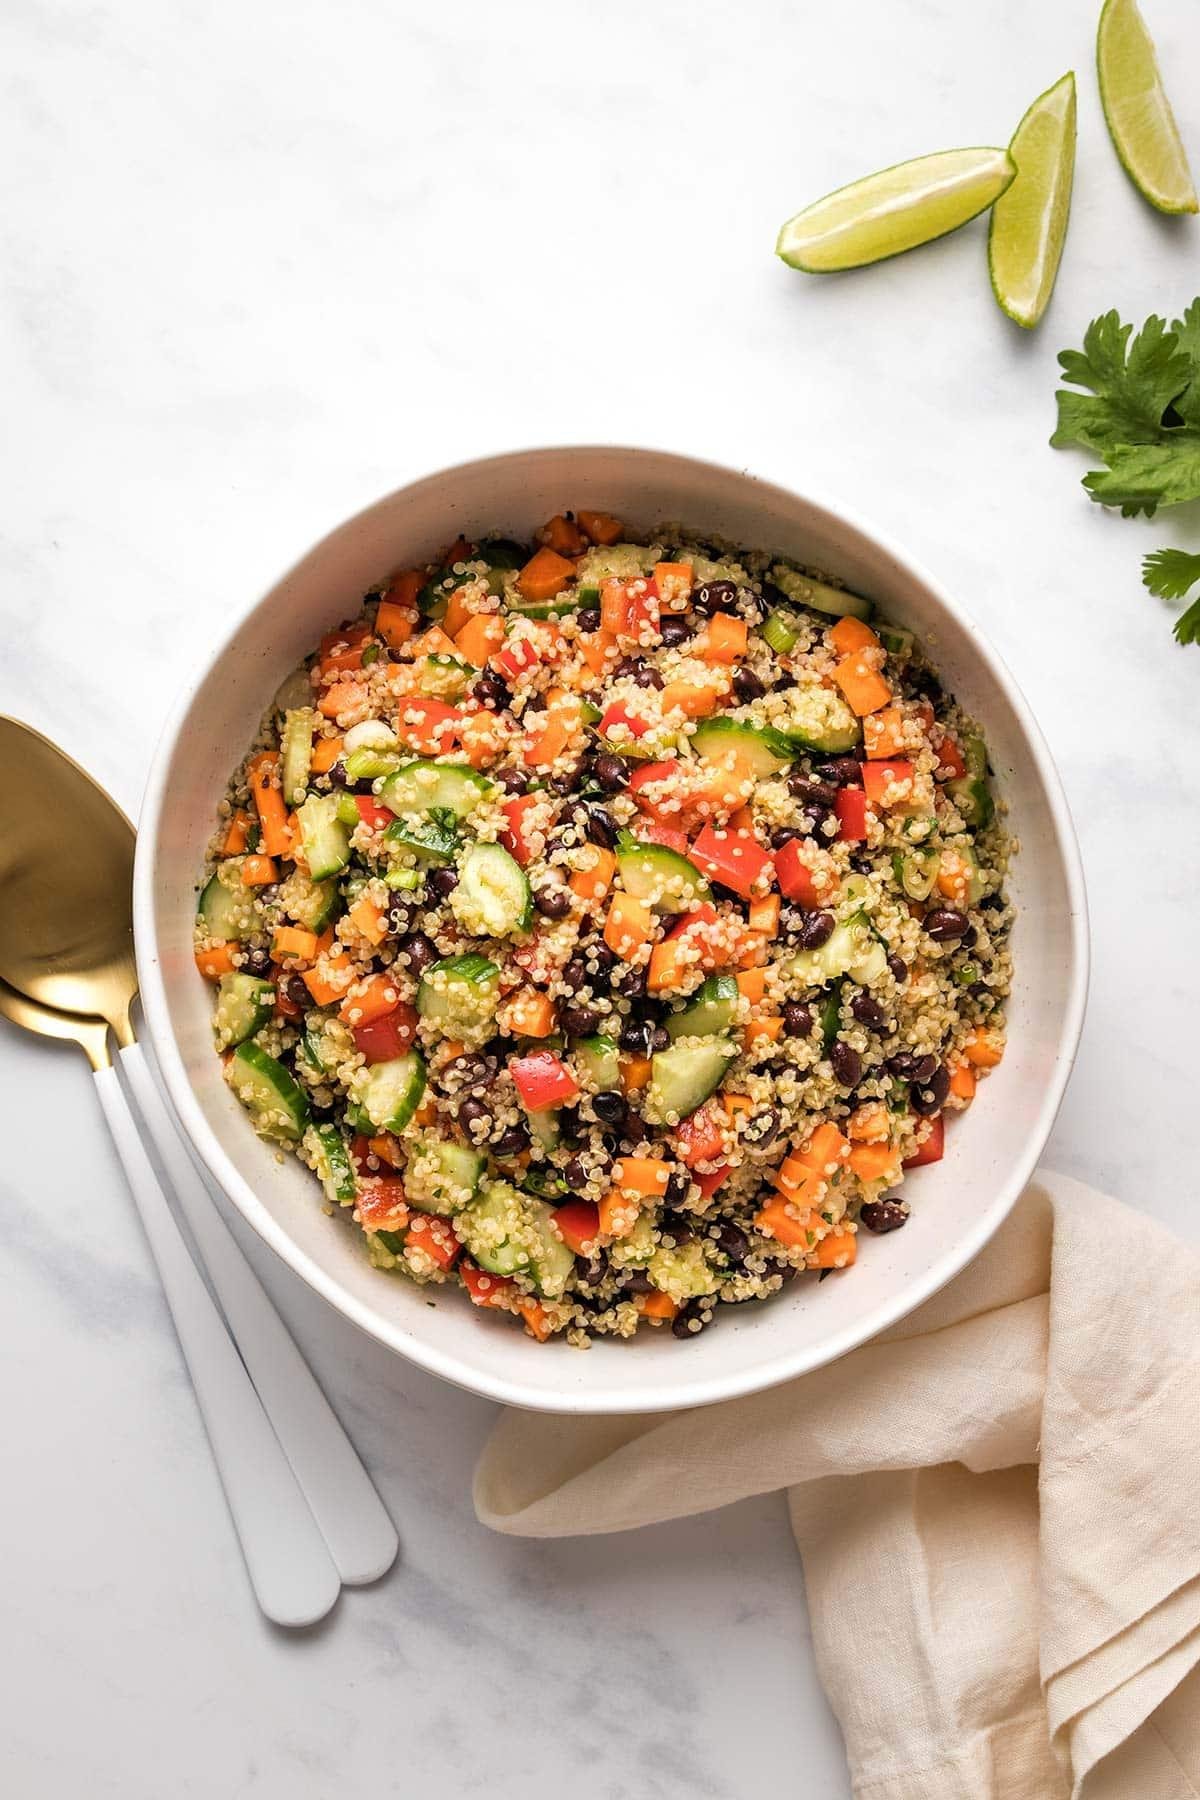 Delicious and Nutritious: A Recipe for Vegan Quinoa and Black Bean Salad